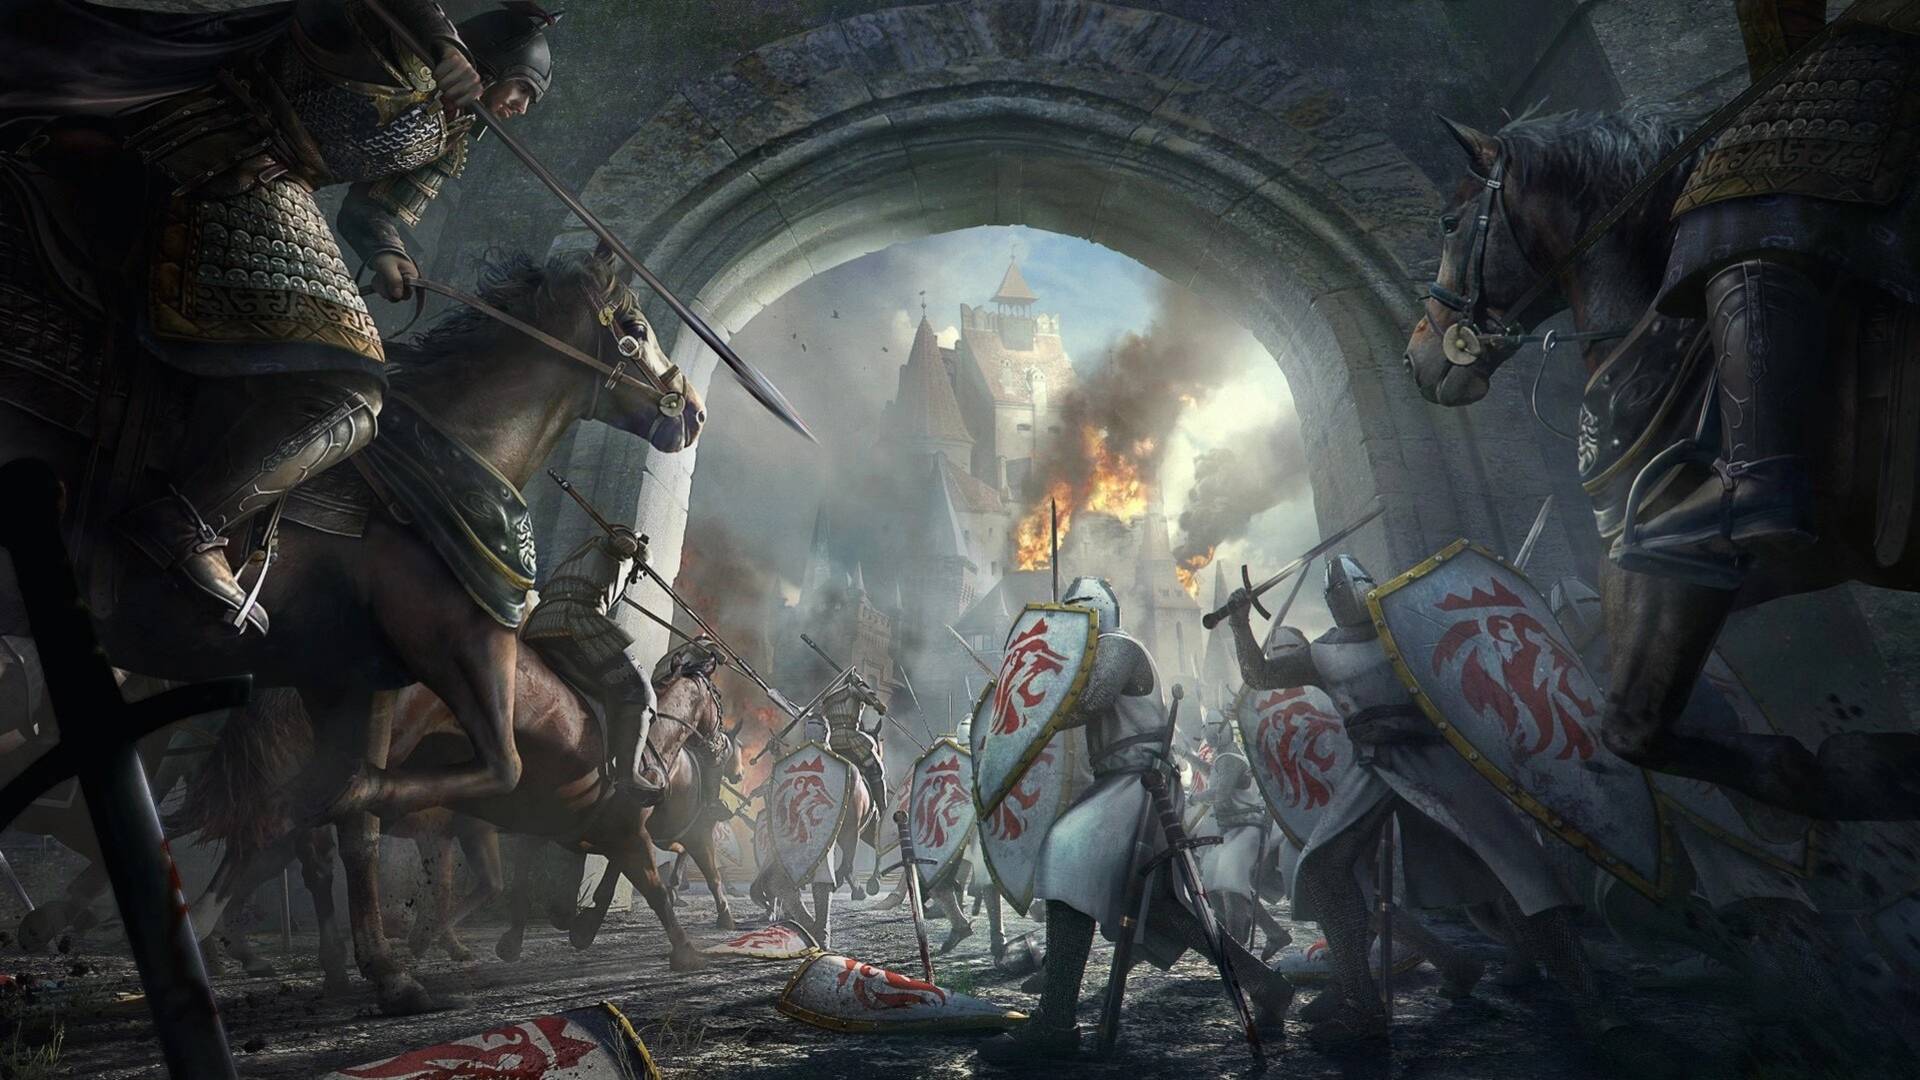 1027272 descargar imagen videojuego, rise of kingdoms, batalla, caballero, guerrero: fondos de pantalla y protectores de pantalla gratis